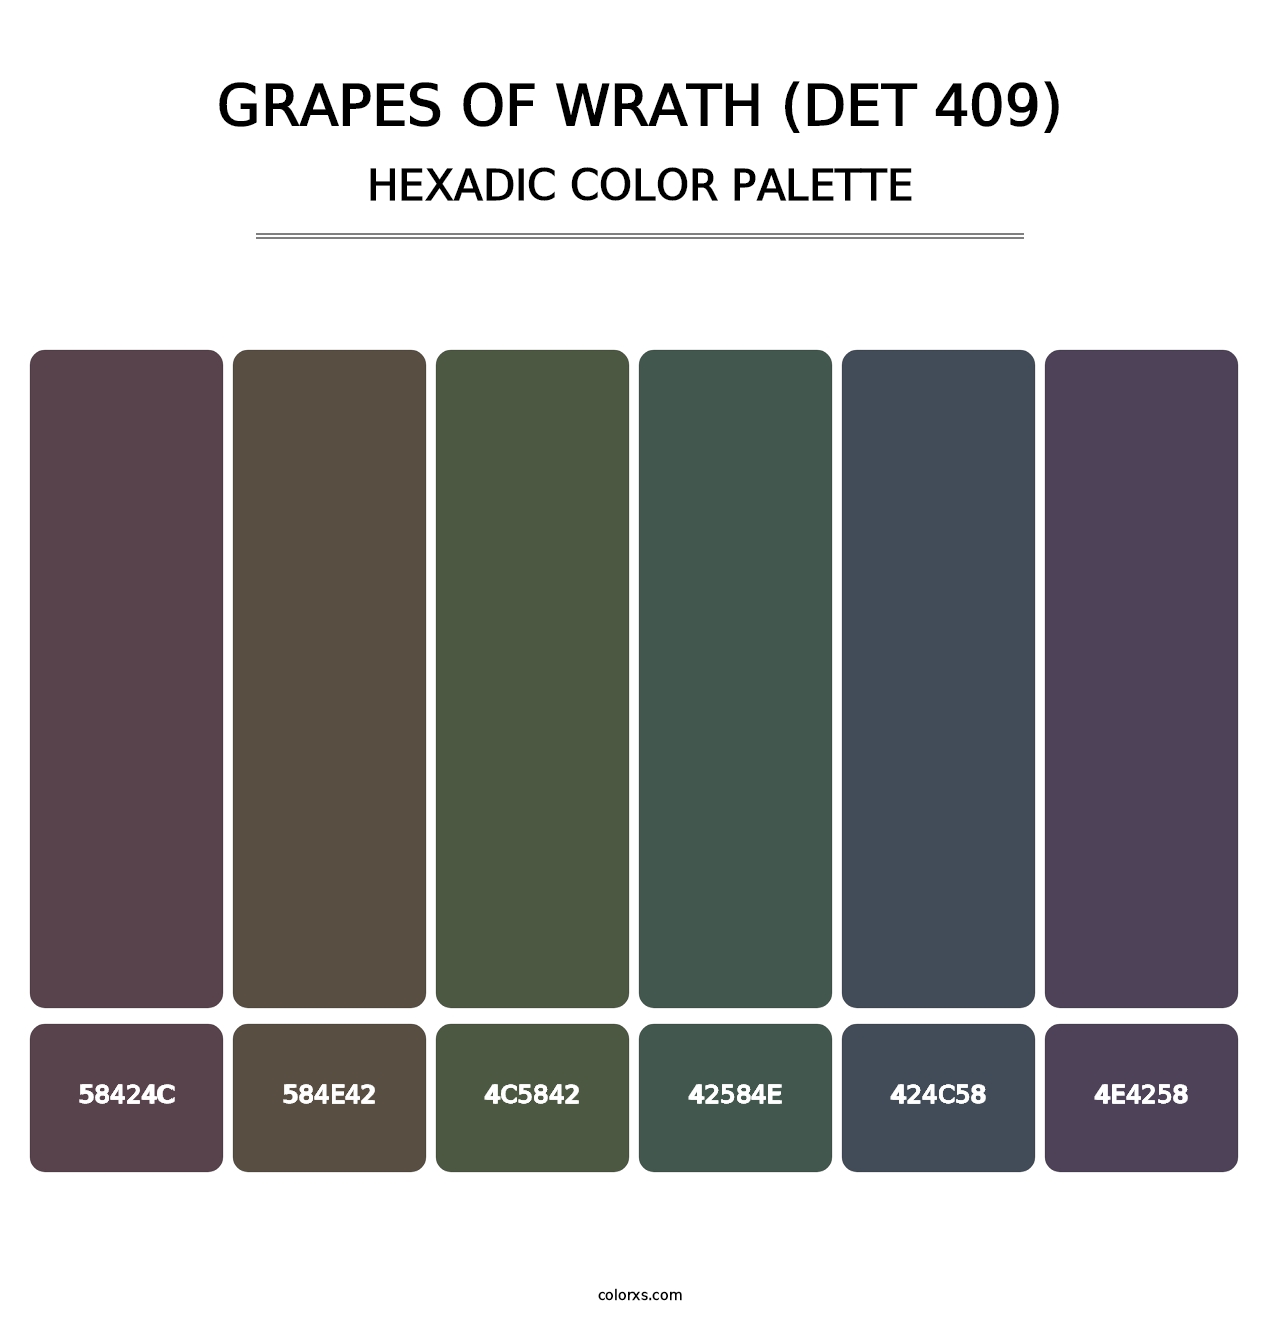 Grapes of Wrath (DET 409) - Hexadic Color Palette